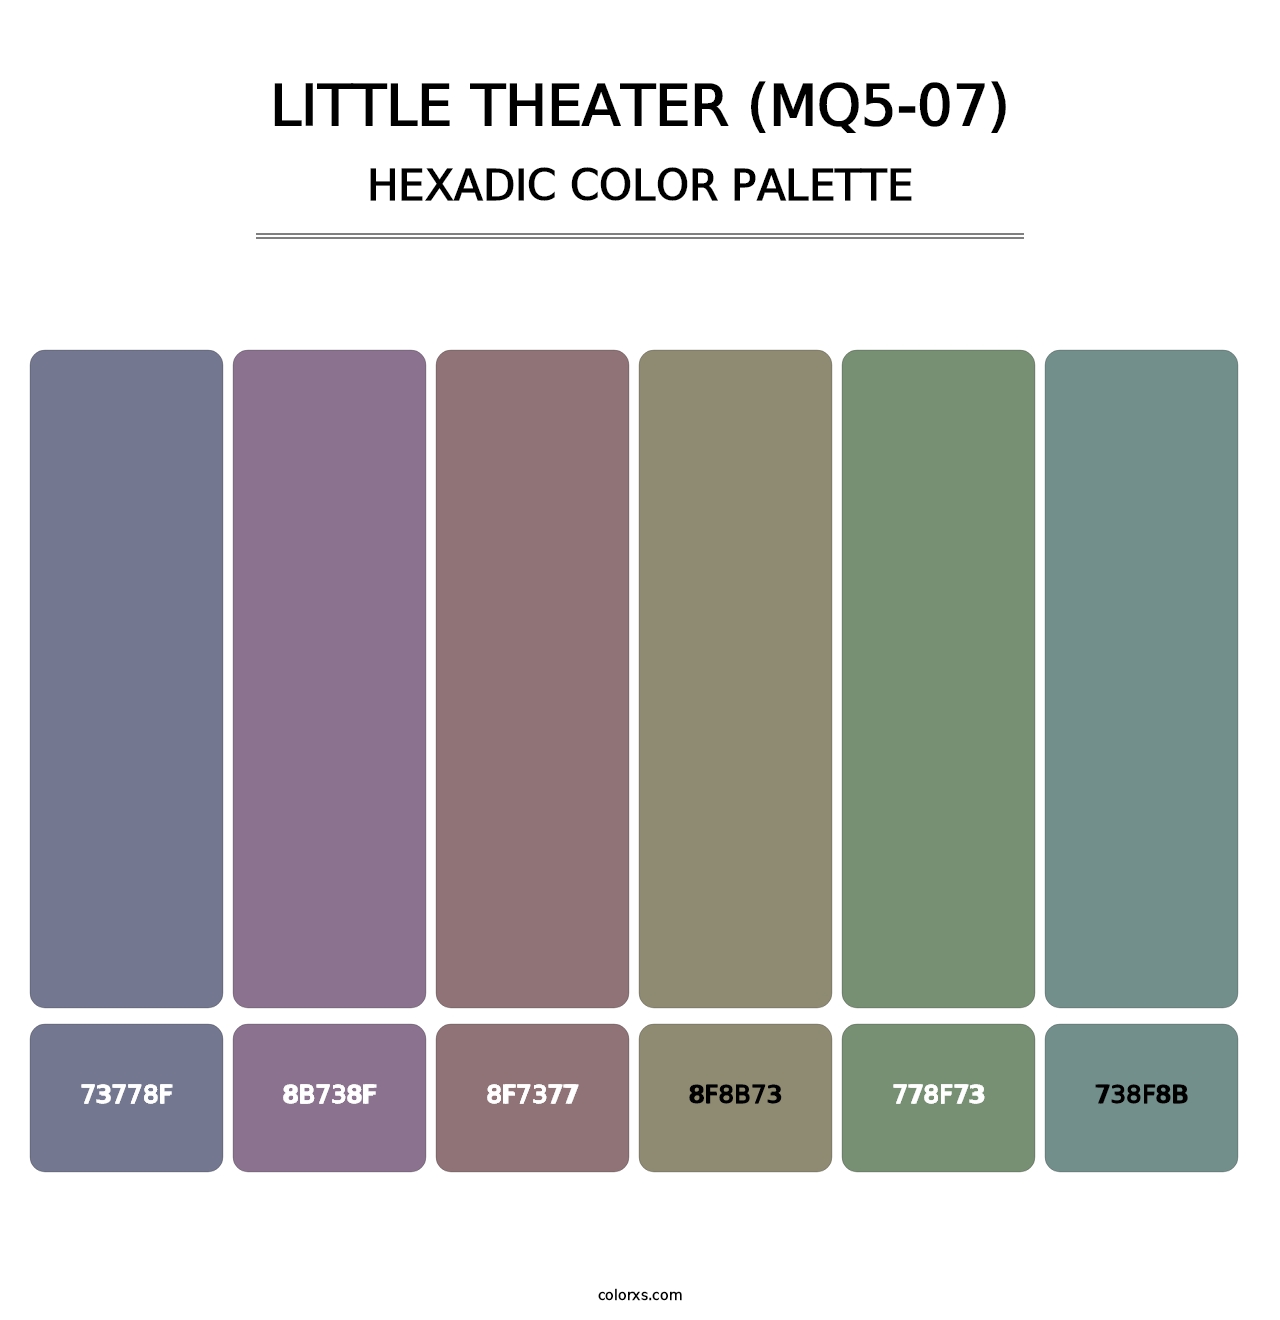 Little Theater (MQ5-07) - Hexadic Color Palette